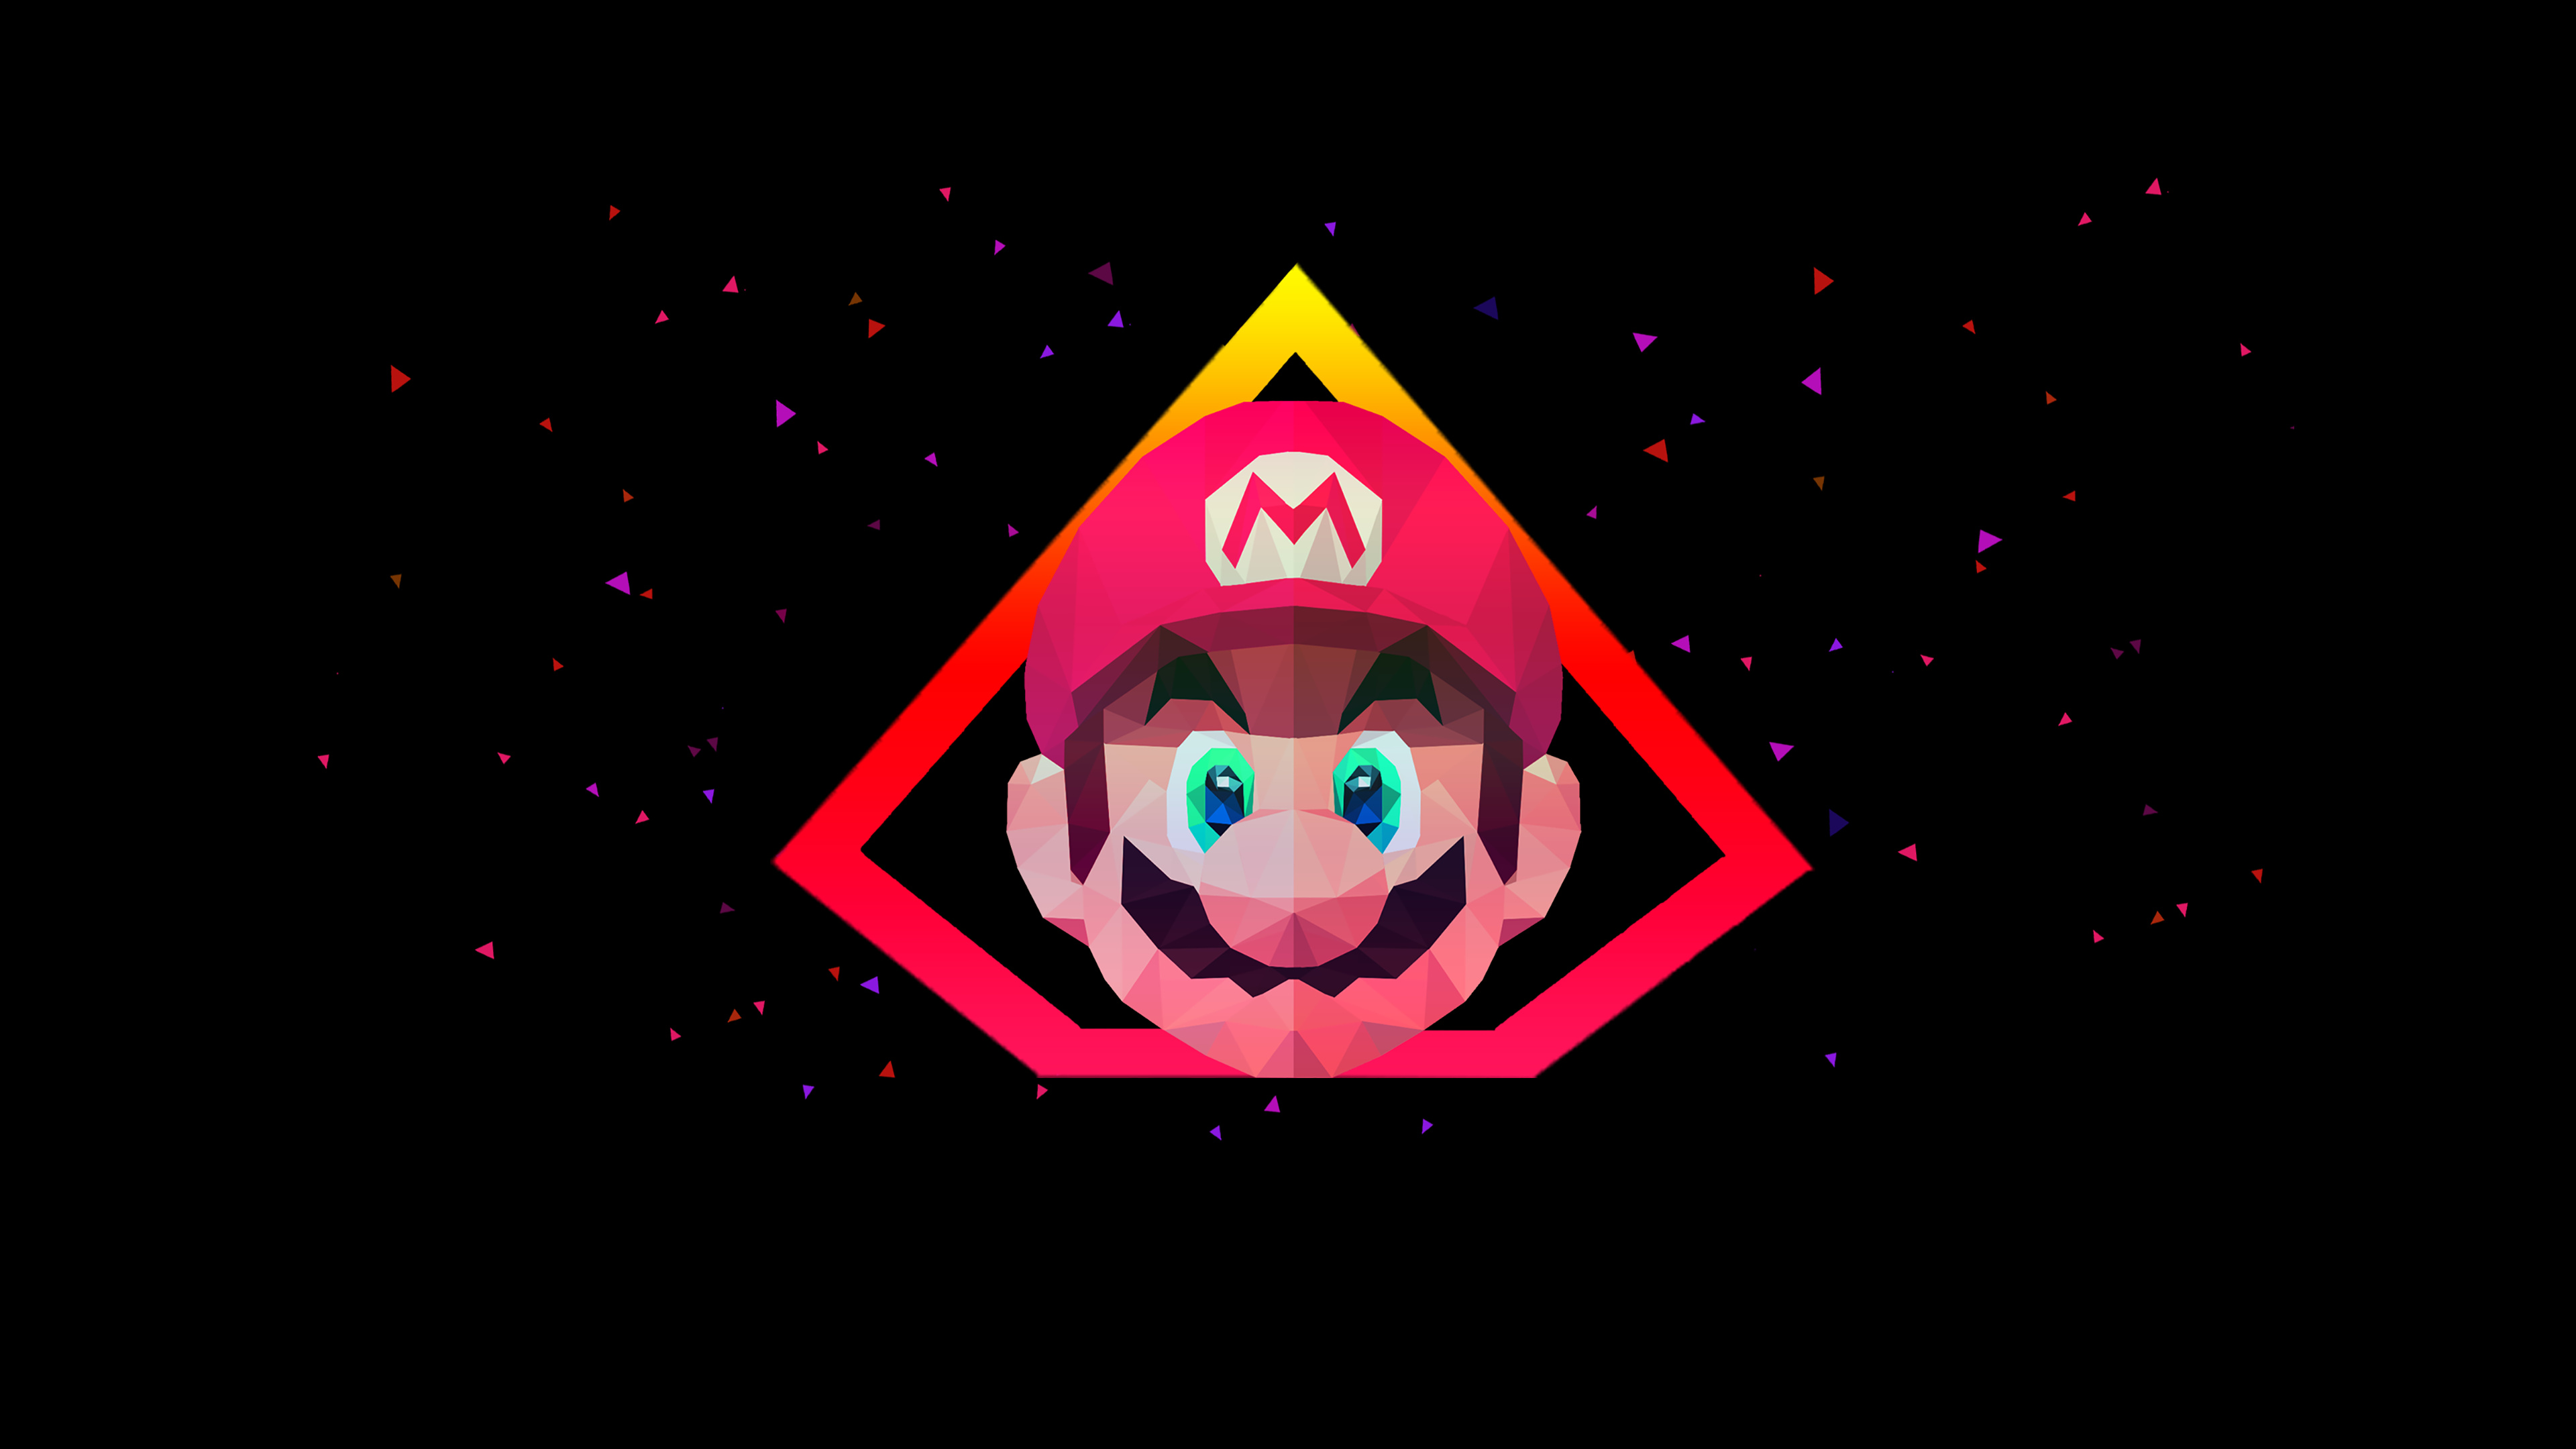 Super Mario artwork, Low poly design, Amoled wallpaper, CG graphics, 3840x2160 4K Desktop